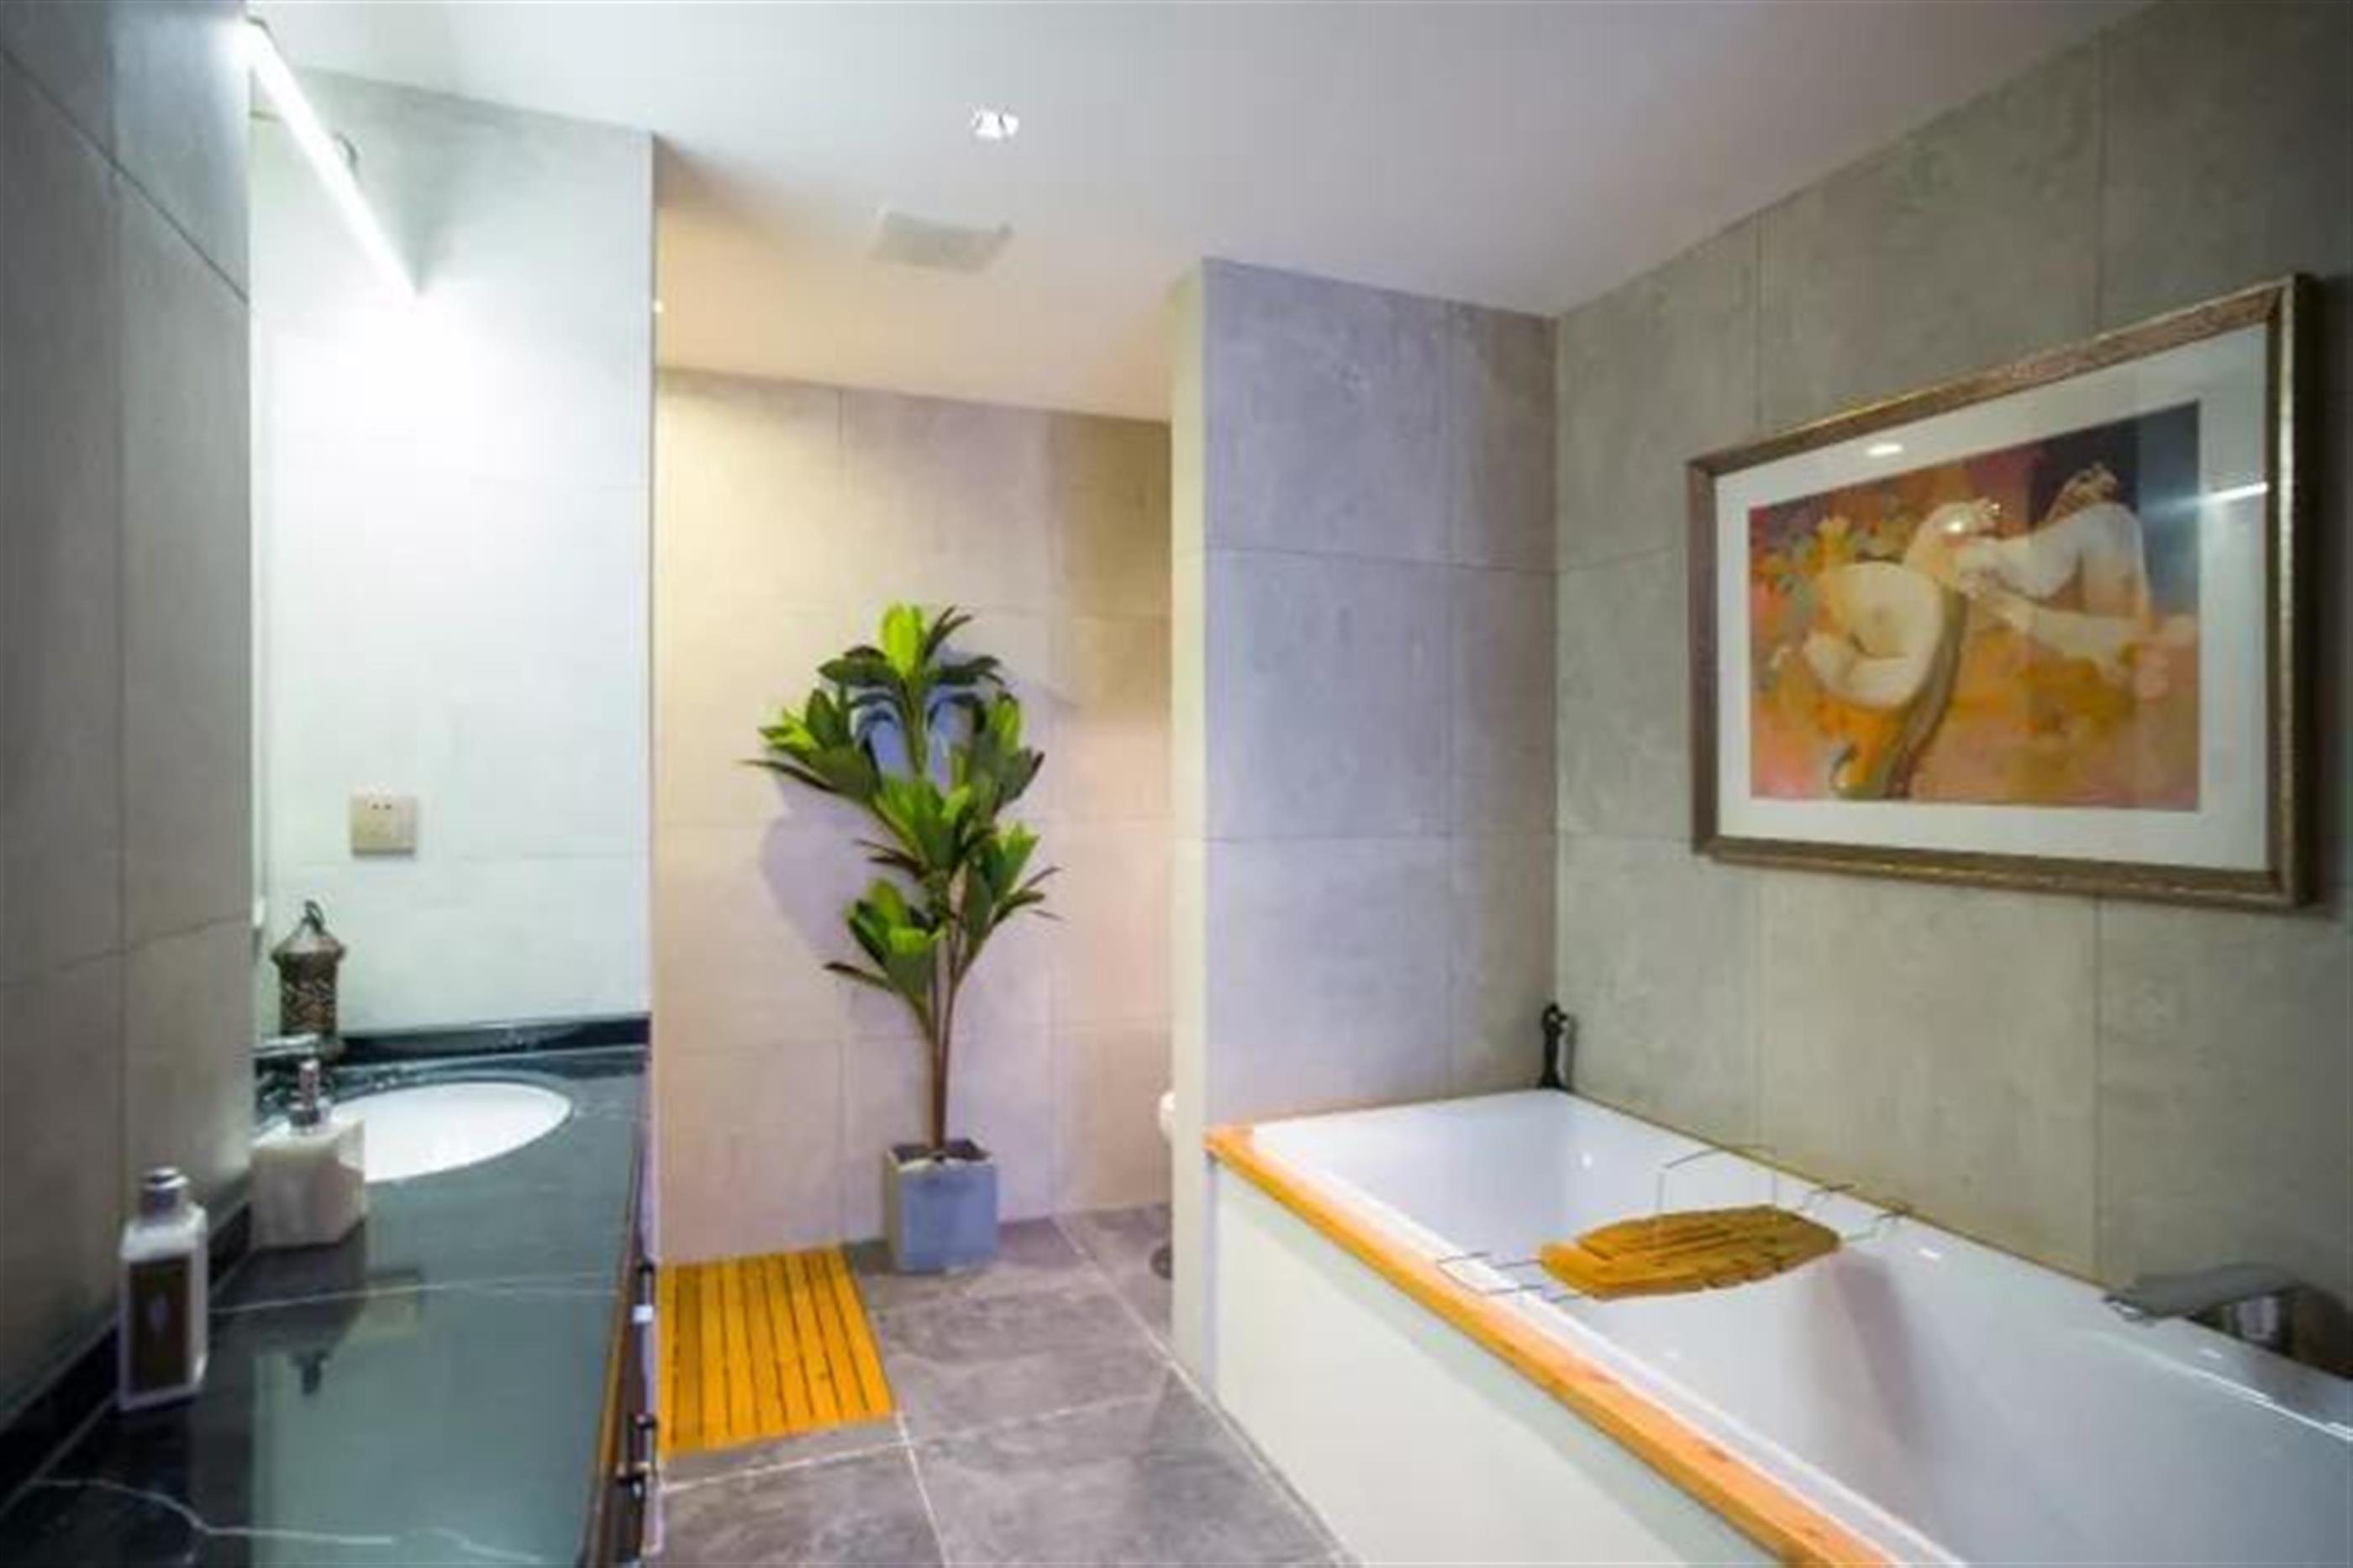 big bathtub Historic High-Quality 4BR Lane House Apartment nr LN 2/12/13 for Rent in Shanghai